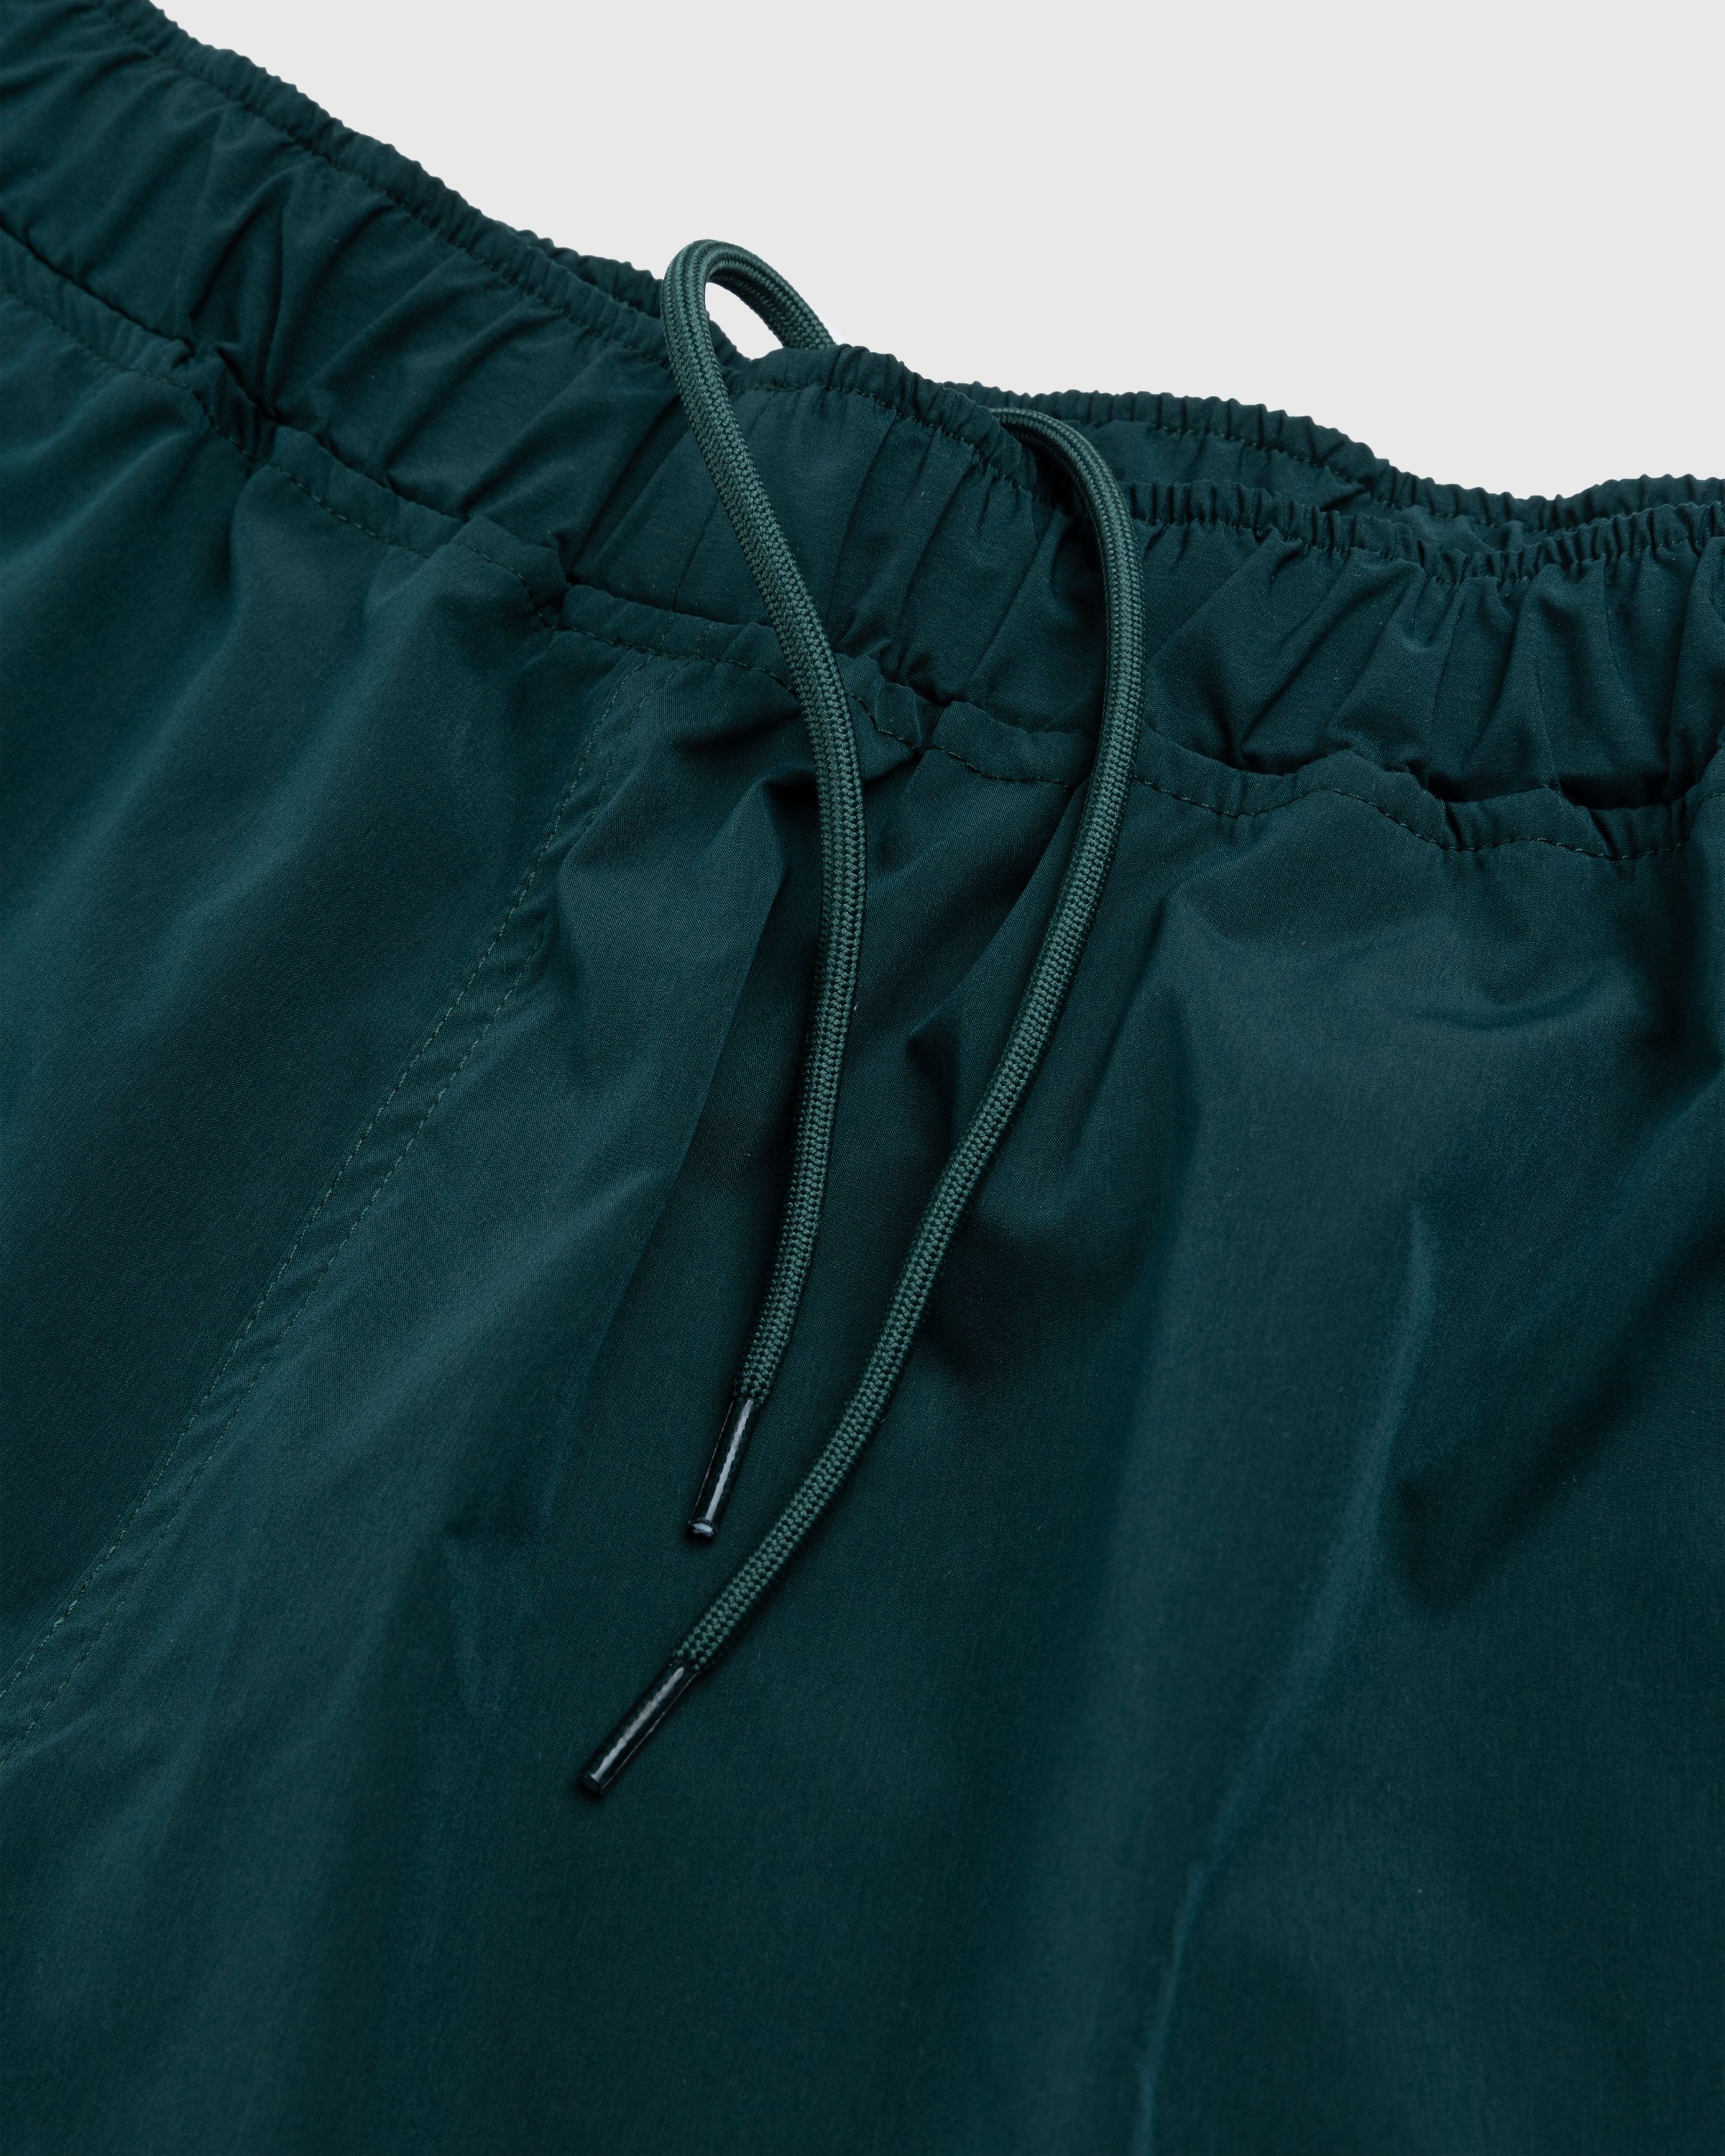 Highsnobiety - Not in Paris 5 Nylon Shorts - Clothing - Green - Image 5